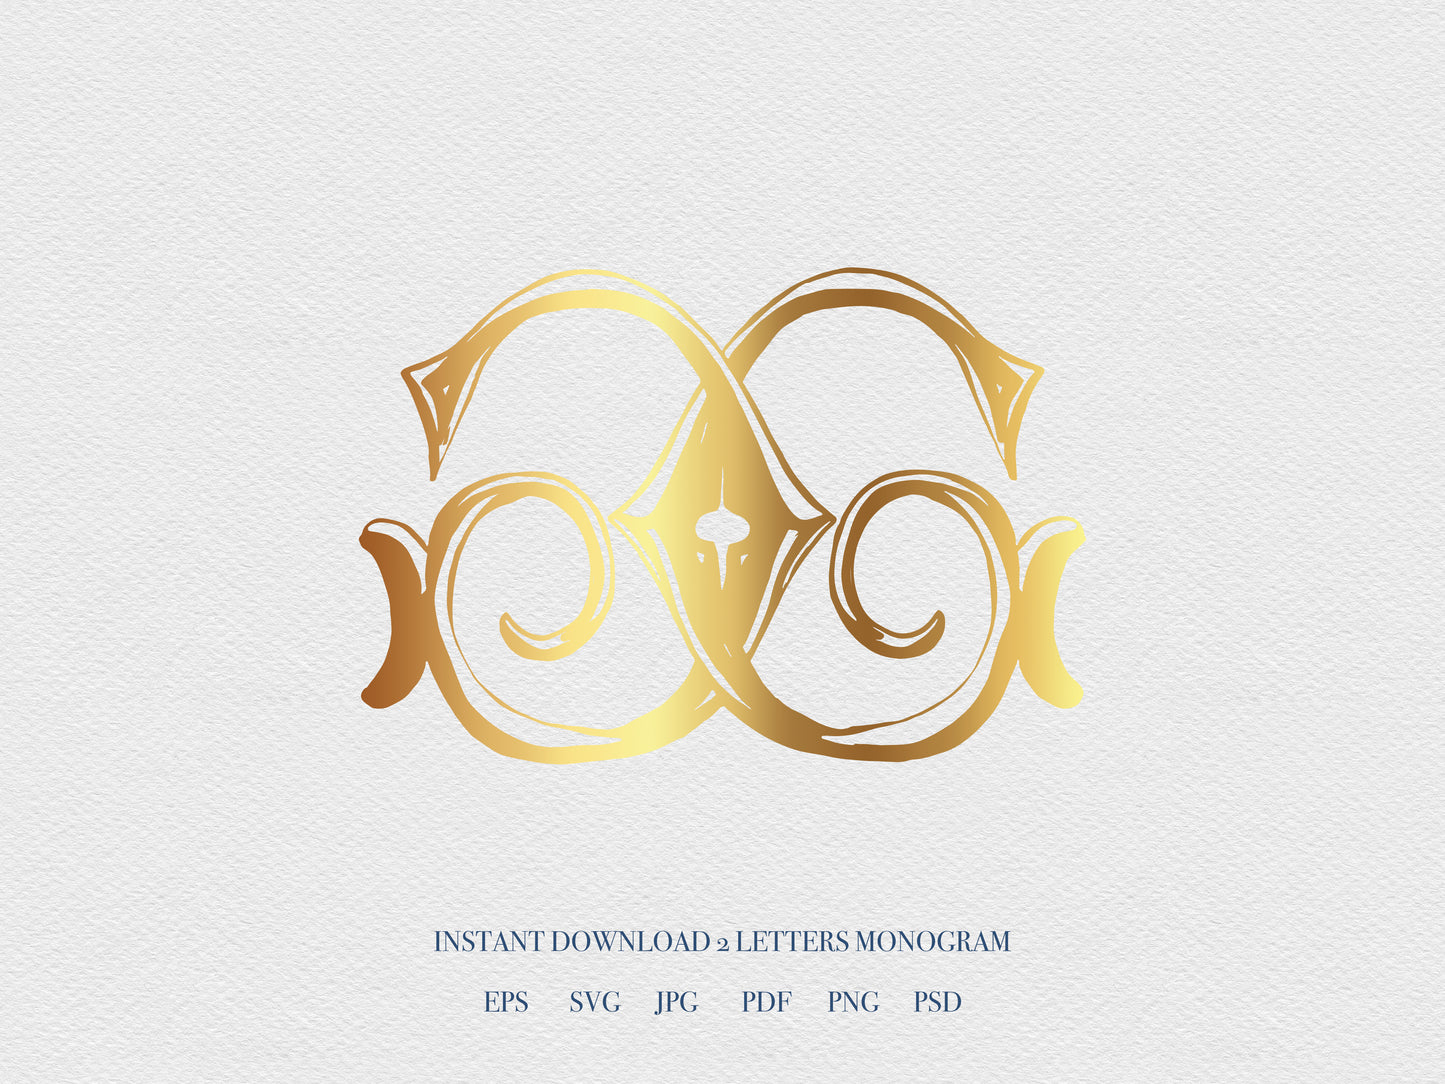 2 Letter Monogram with Letters GG | Digital Download - Wedding Monogram SVG, Personal Logo, Wedding Logo for Wedding Invitations The Wedding Crest Lab